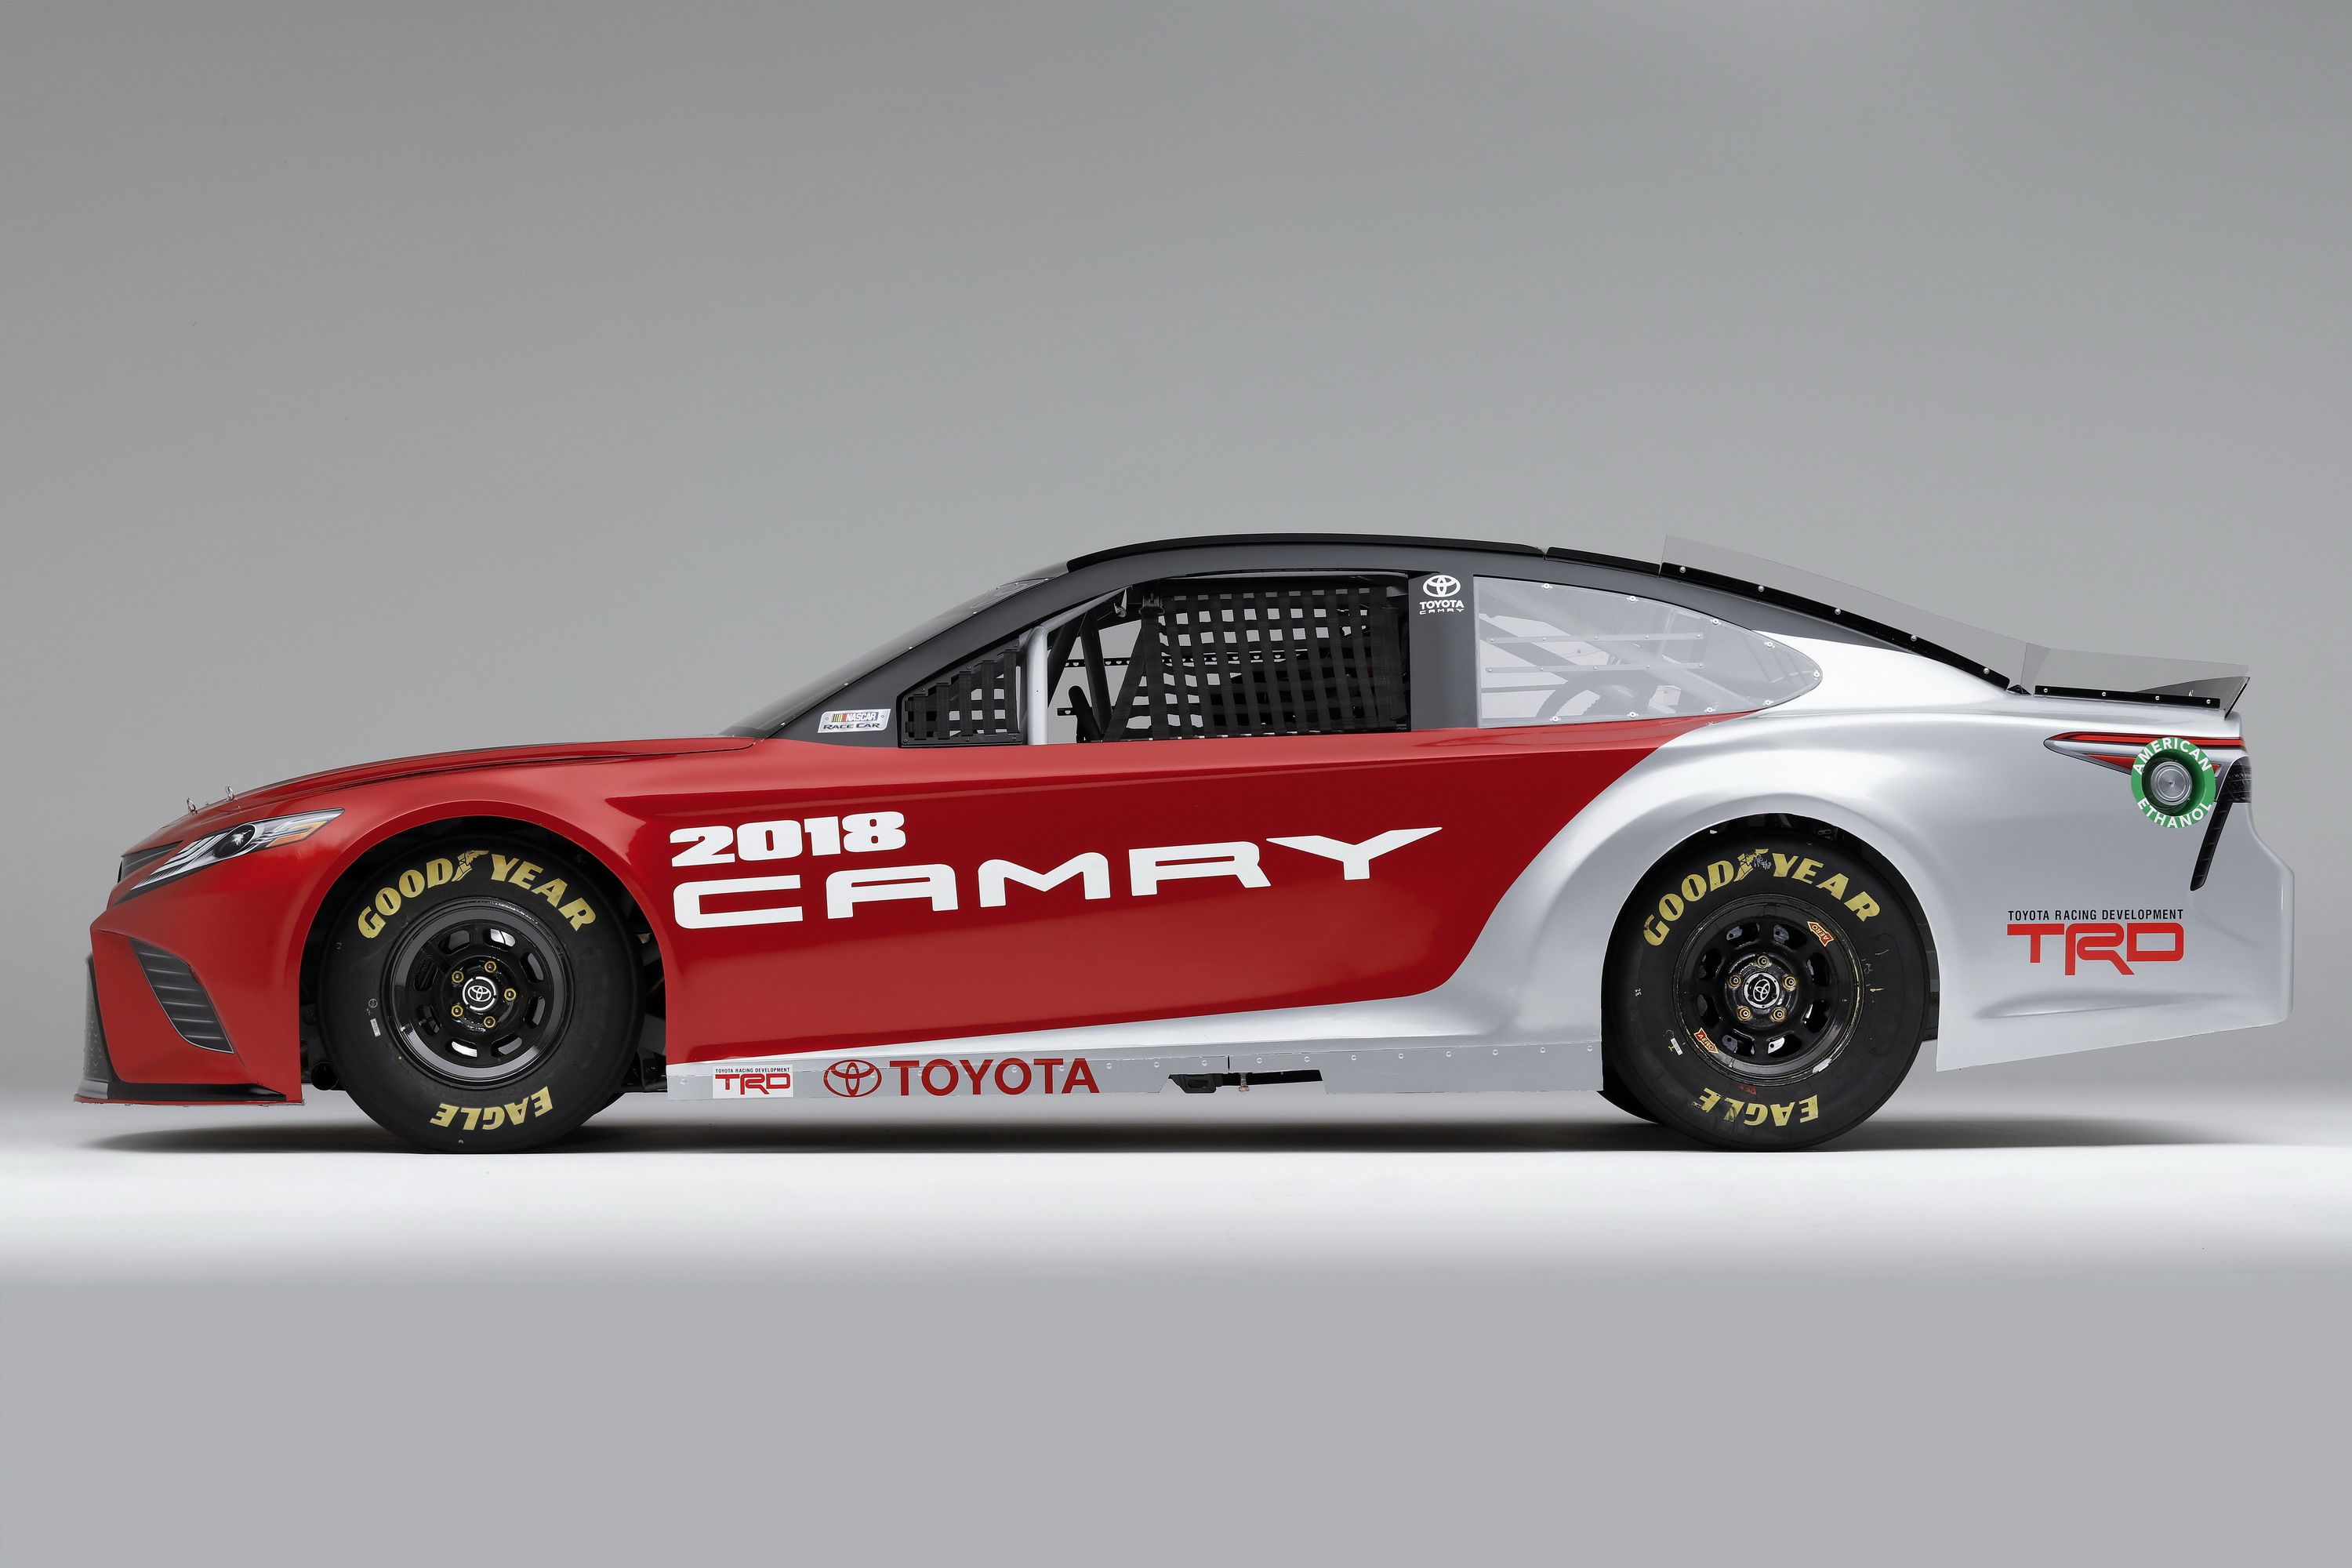 2018 Toyota Camry NASCAR Cup Car